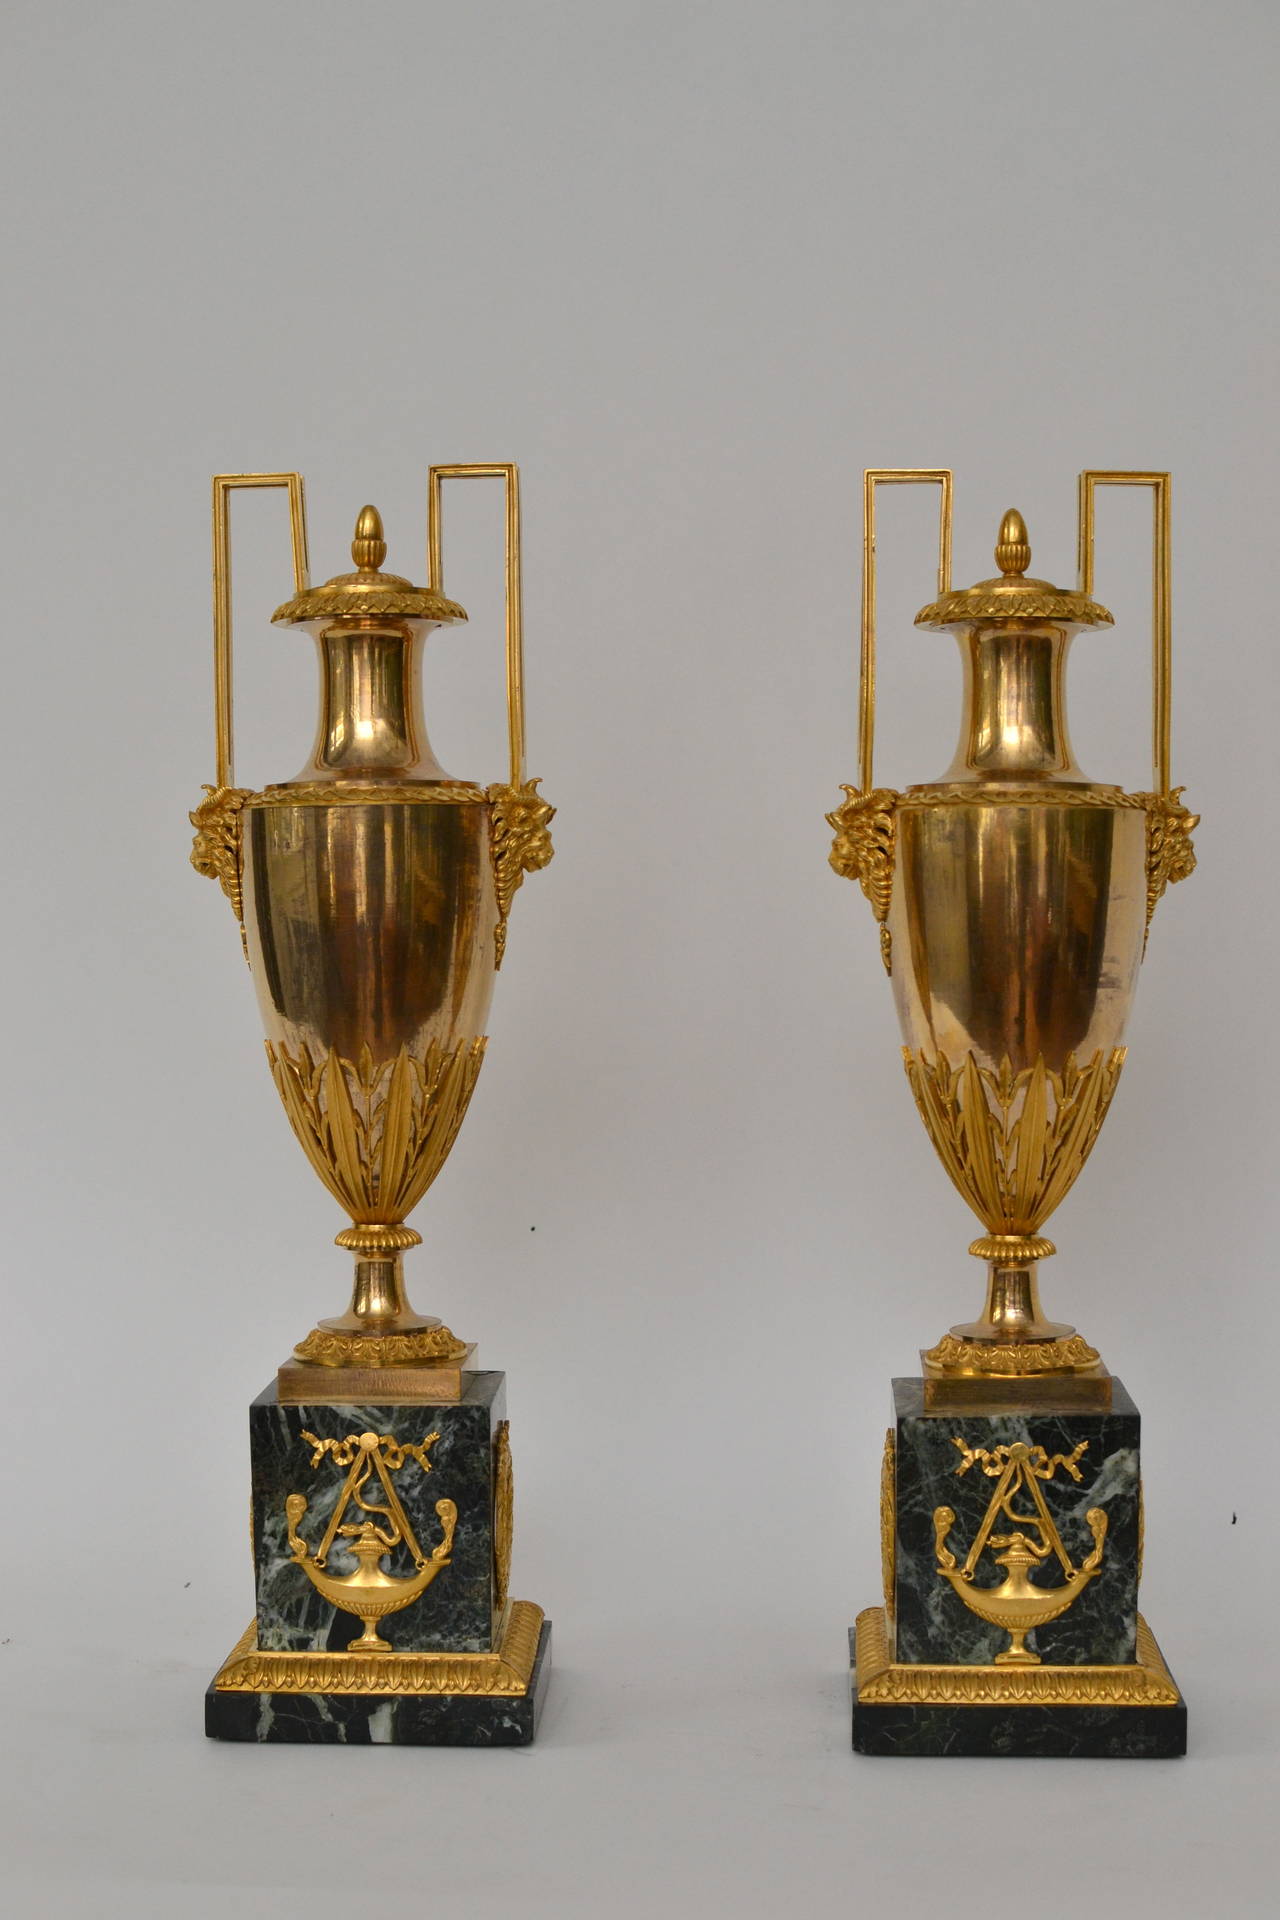 French Fine Pair of Empire Gilt Bronze and Marble Vases, Paris, circa 1810